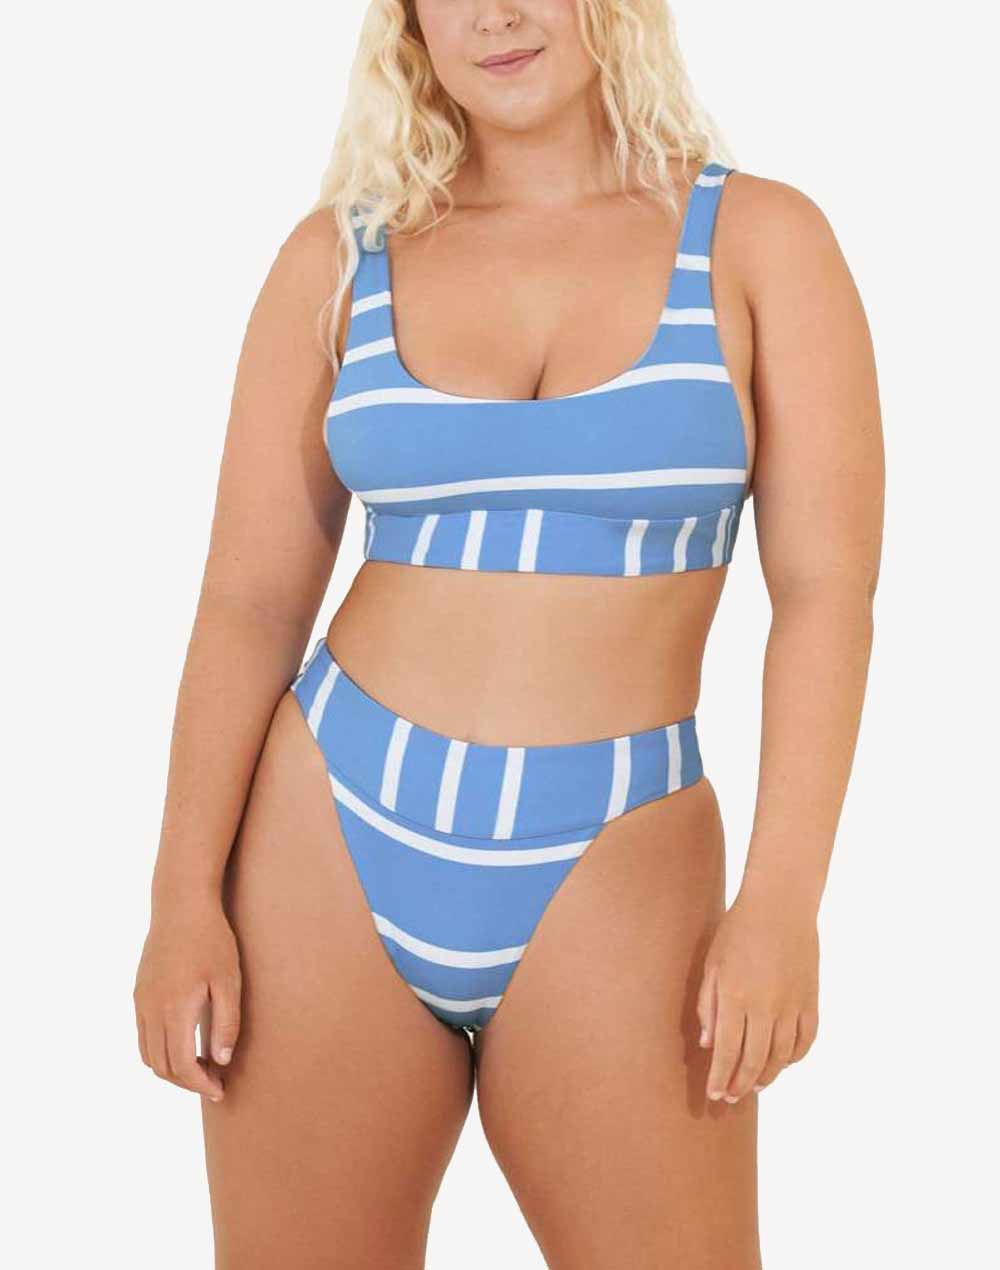 Sail Stripe Donna Bralette Bikini Top#color_sail-stripe-blue